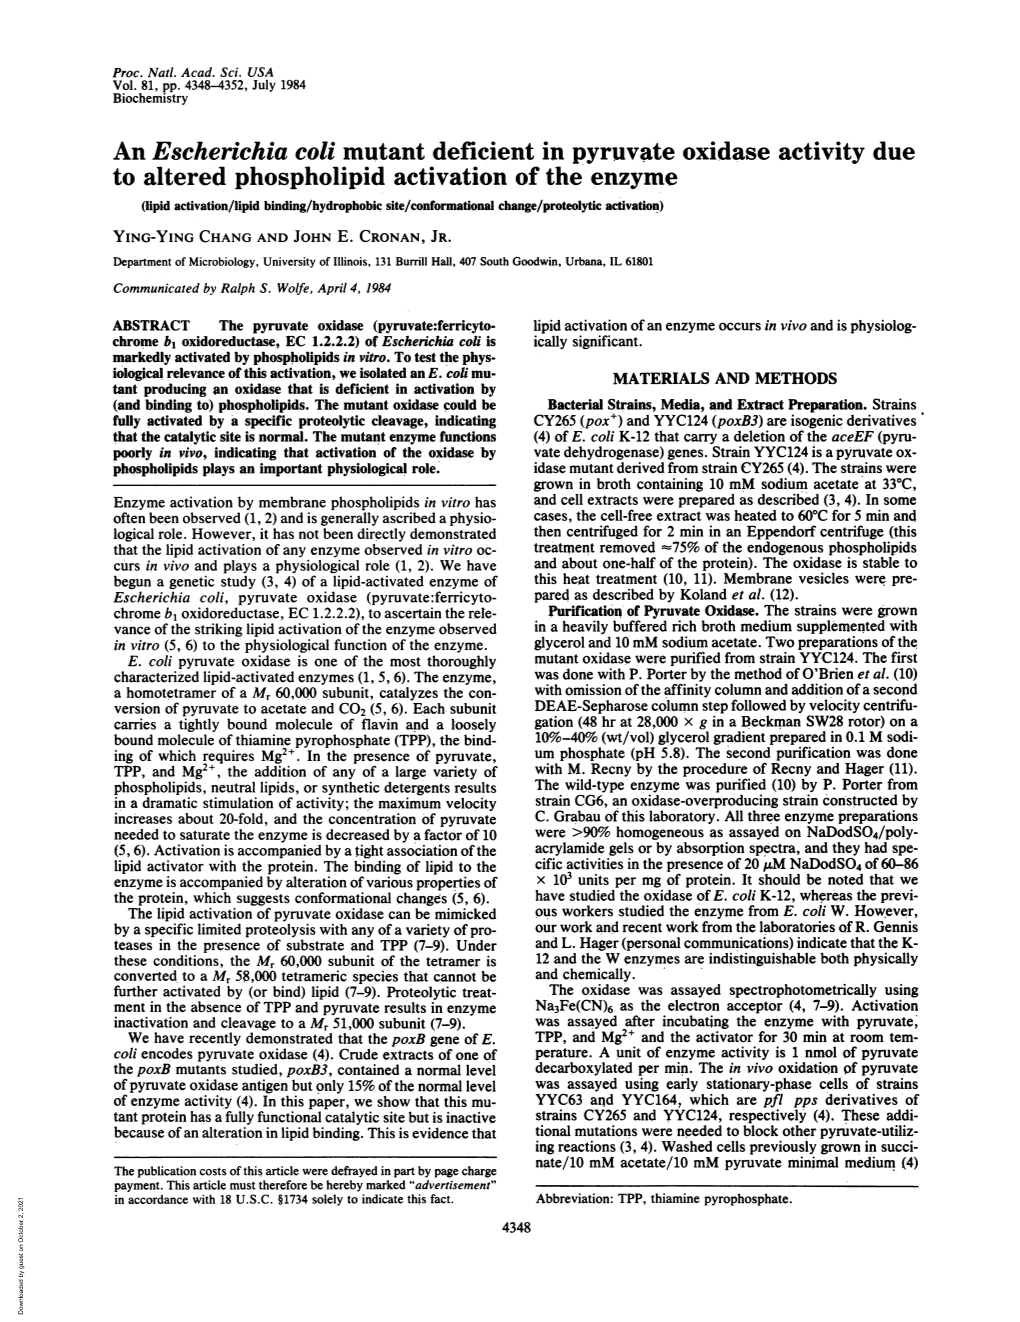 An Escherichiacoli Mutant Deficient in Pyruvate Oxidase Activity Due To